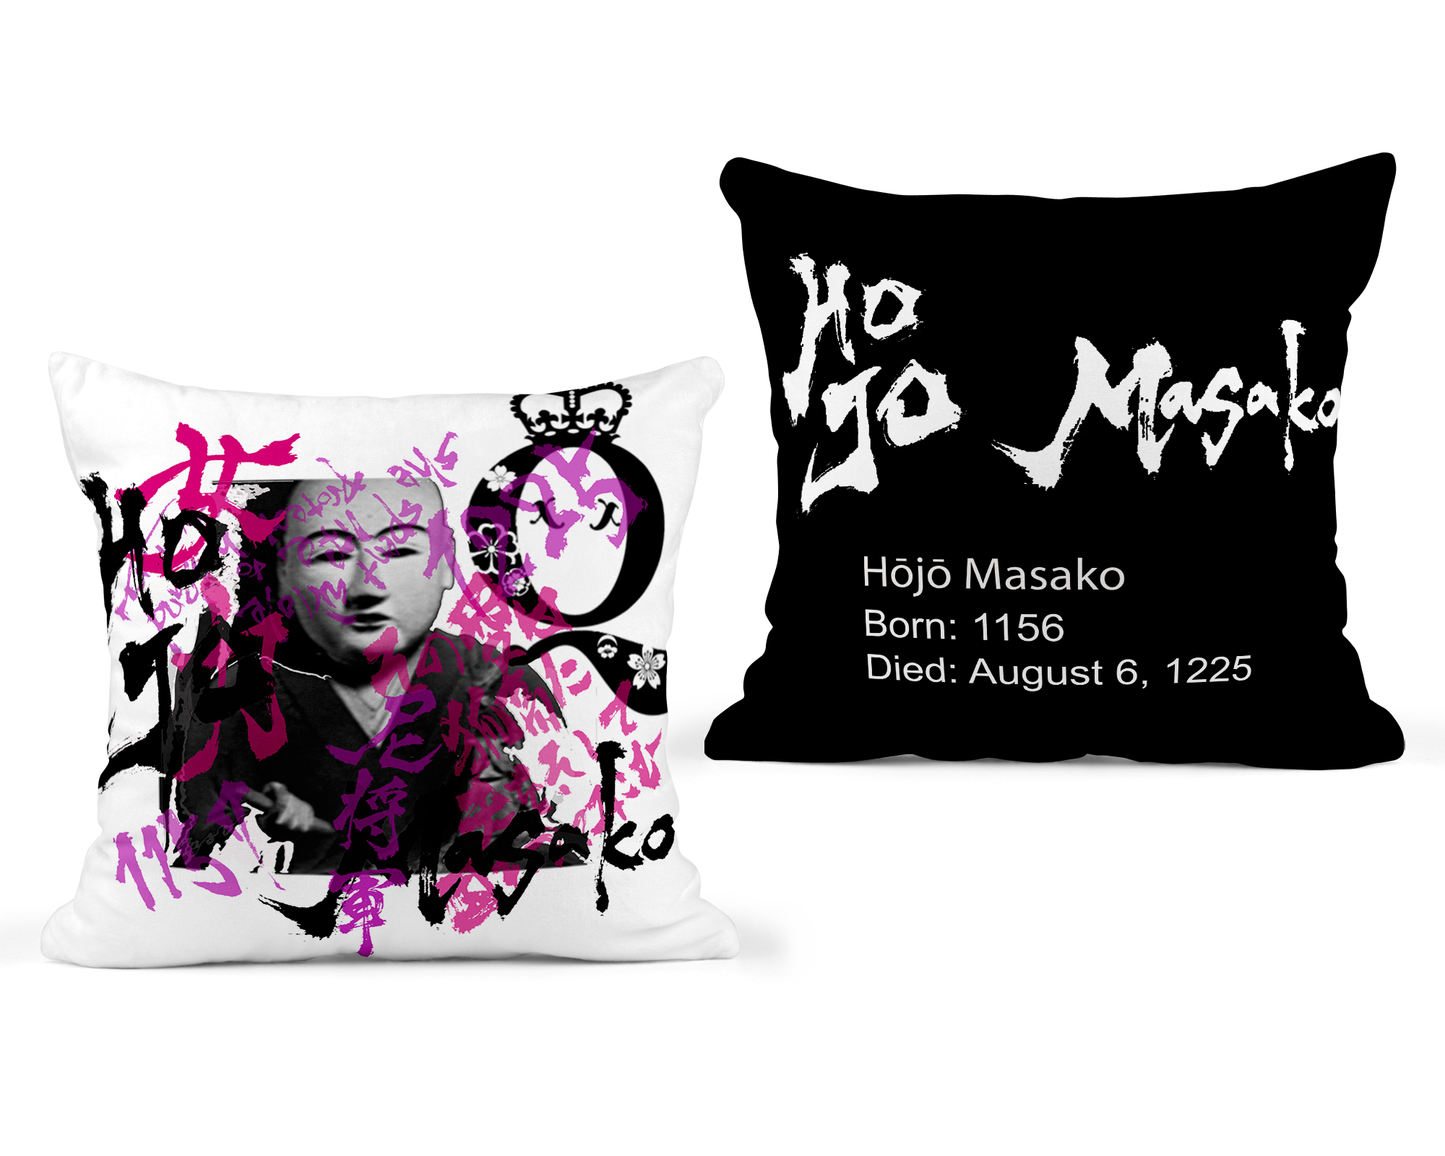 Hojo Masako Throw Pillow - Black Back 18x18